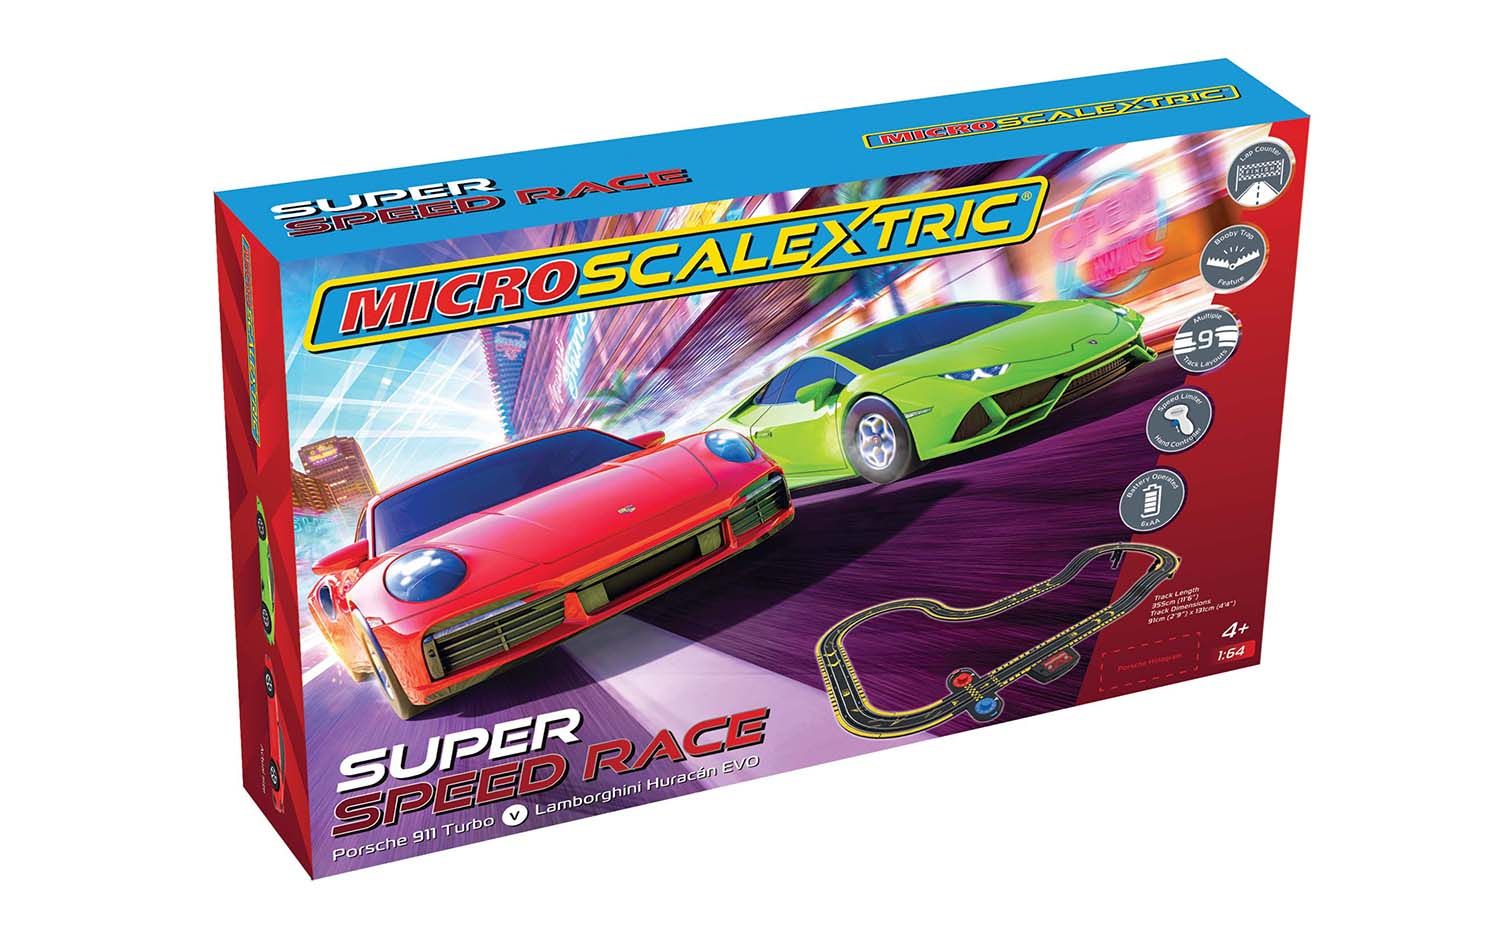 G1178M Micro Scalextric Super Speed Race Set - Lamborghini vs Porsche -  Battery Powered Set